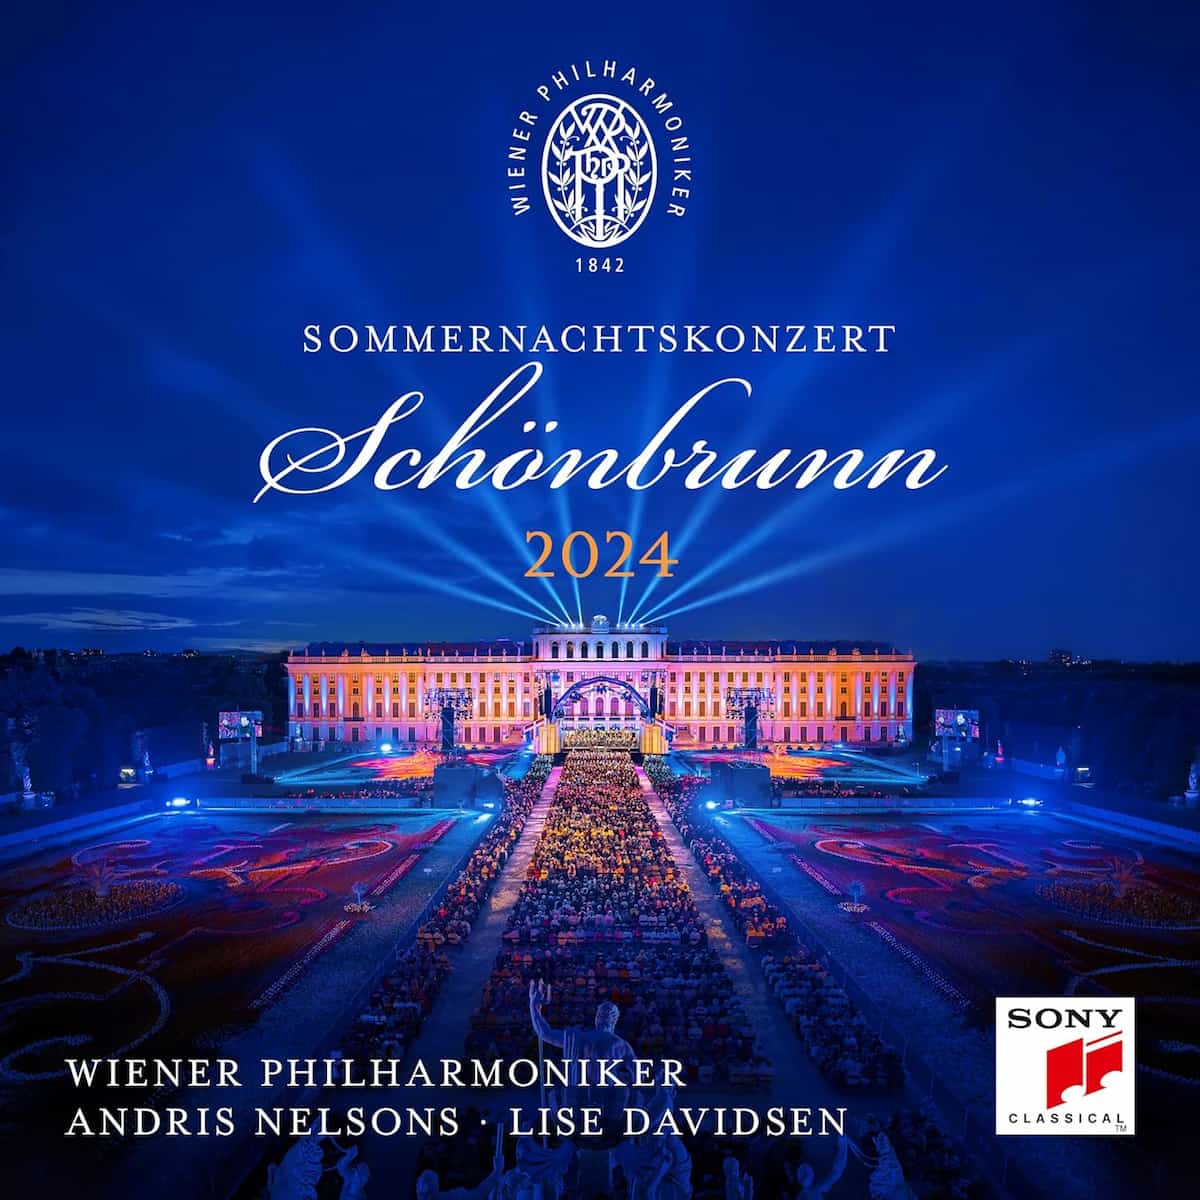 CD Sommernachtskonzert 2024 Wiener Philharmoniker - hier im Bild das Album-Cover